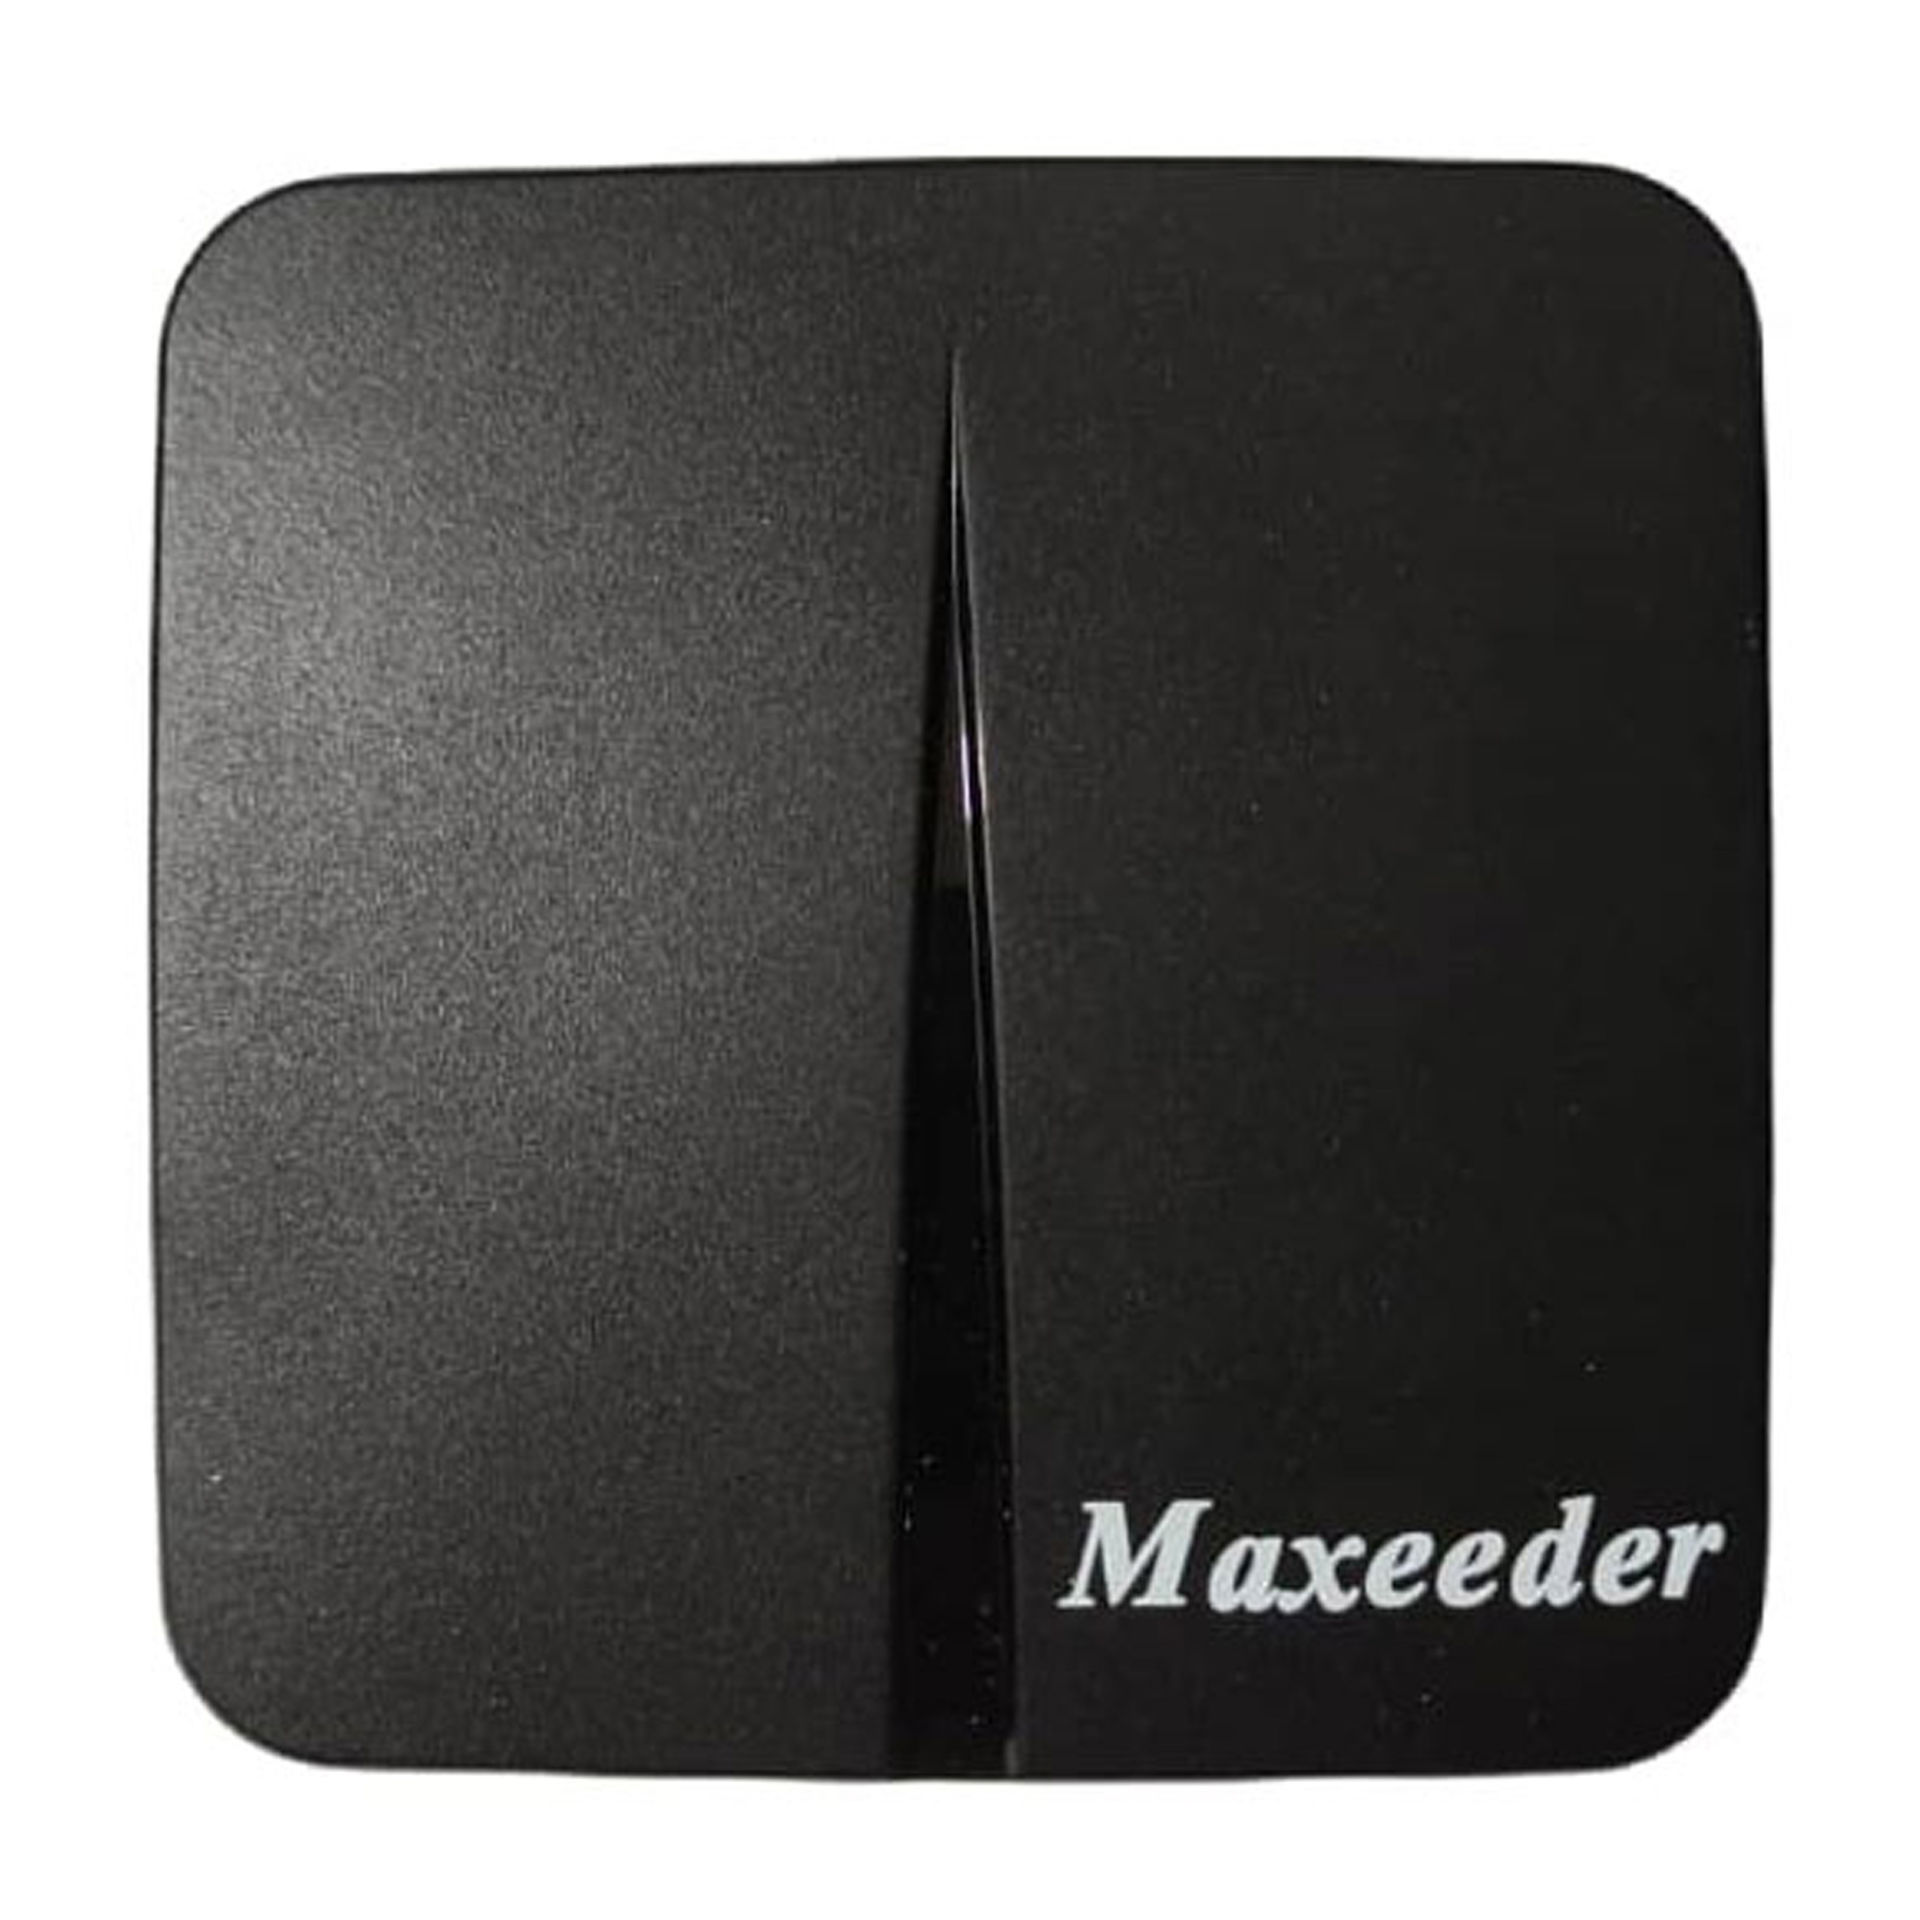 اندروید باکس مکسیدر مدل ANDROID BOX MAXEEDER MX-AT3 JS1621